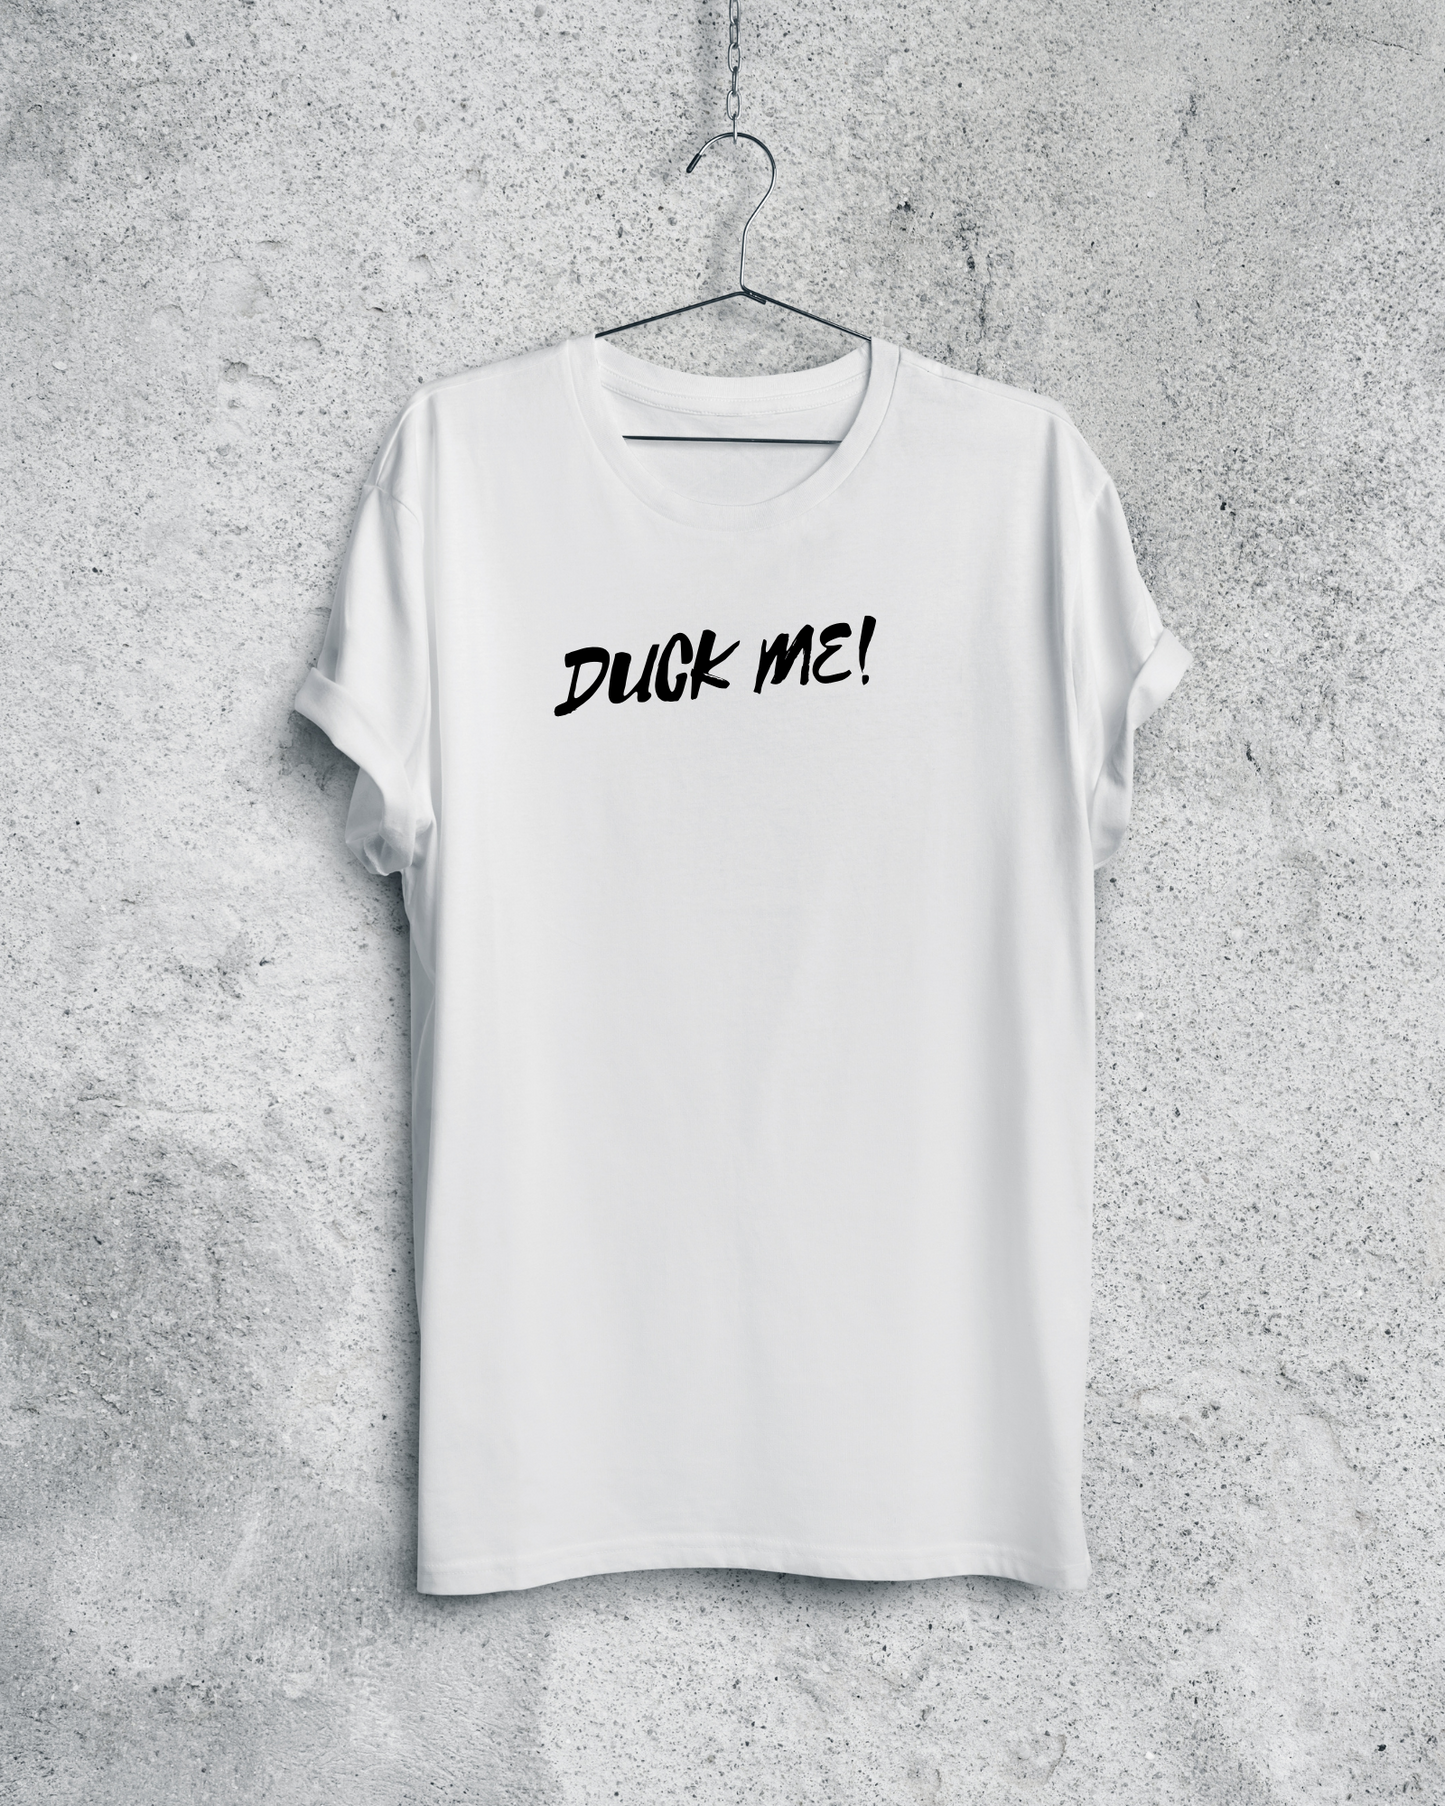 T-shirt duck mig!